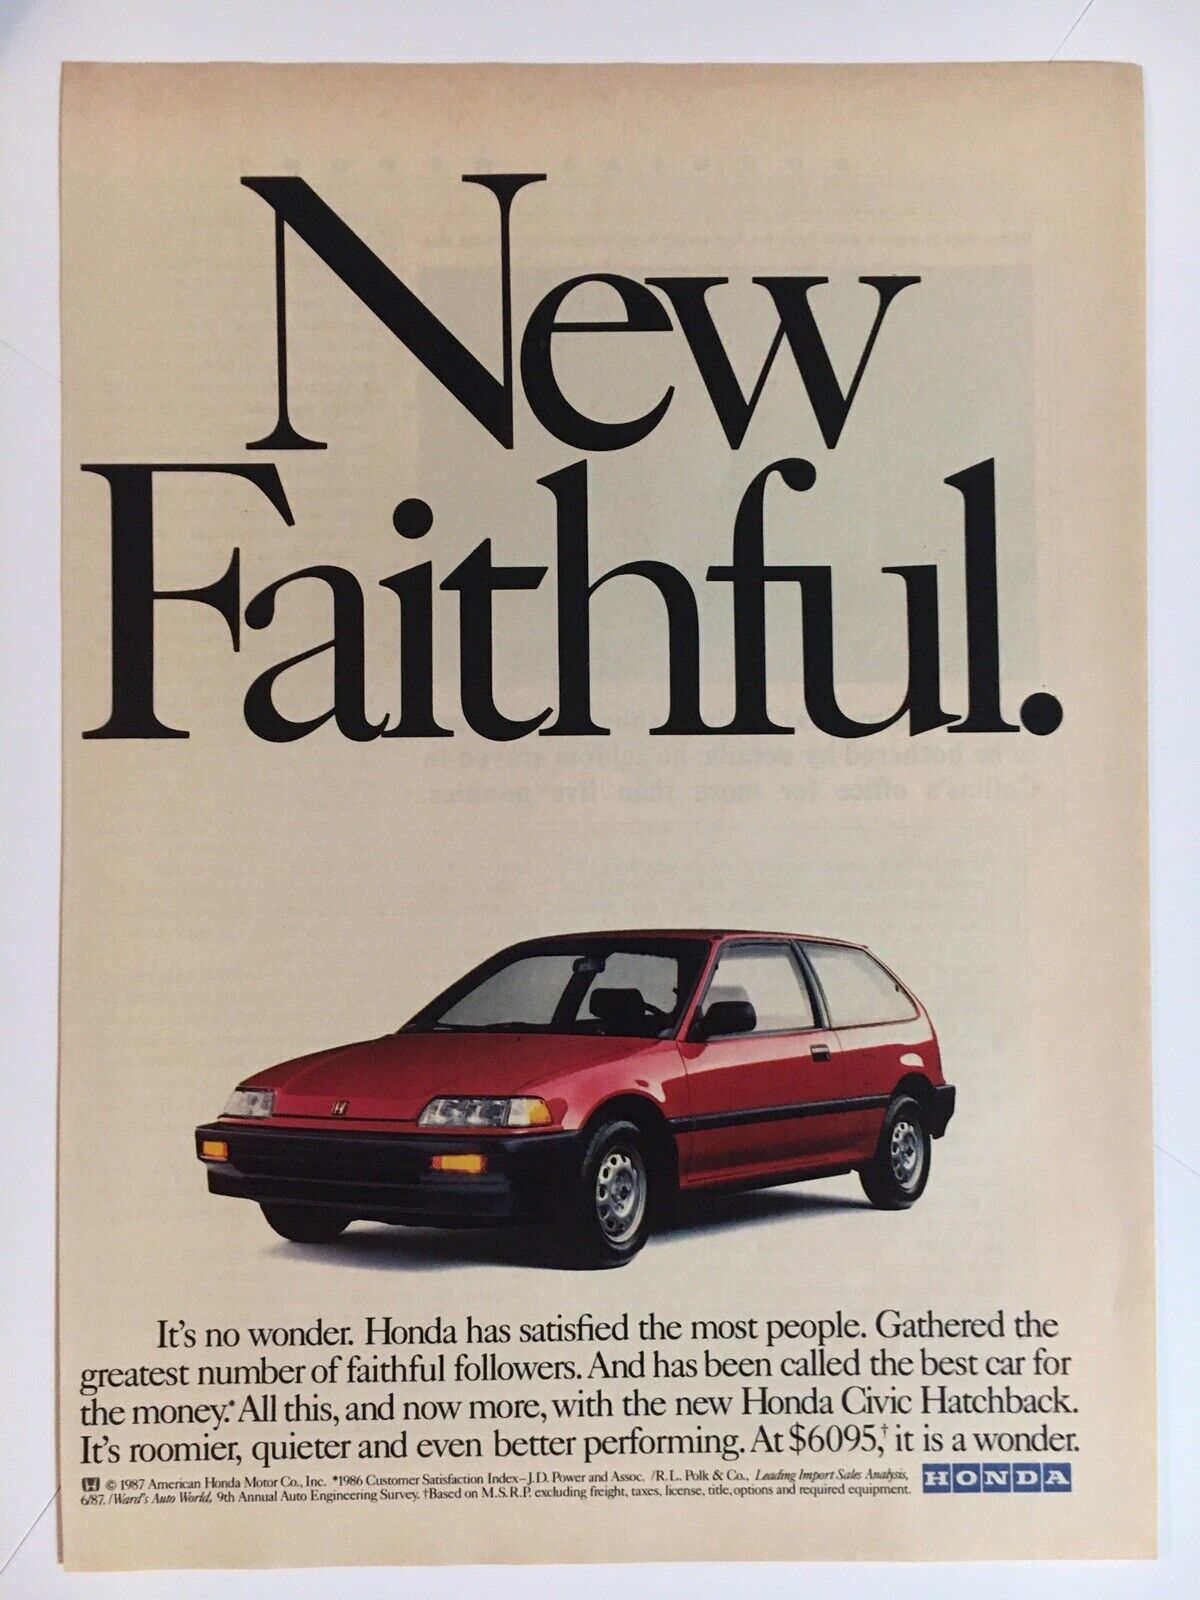 Honda Civic Hatchback 1987 Vintage Print Ad 8x11 Inches Wall Decor